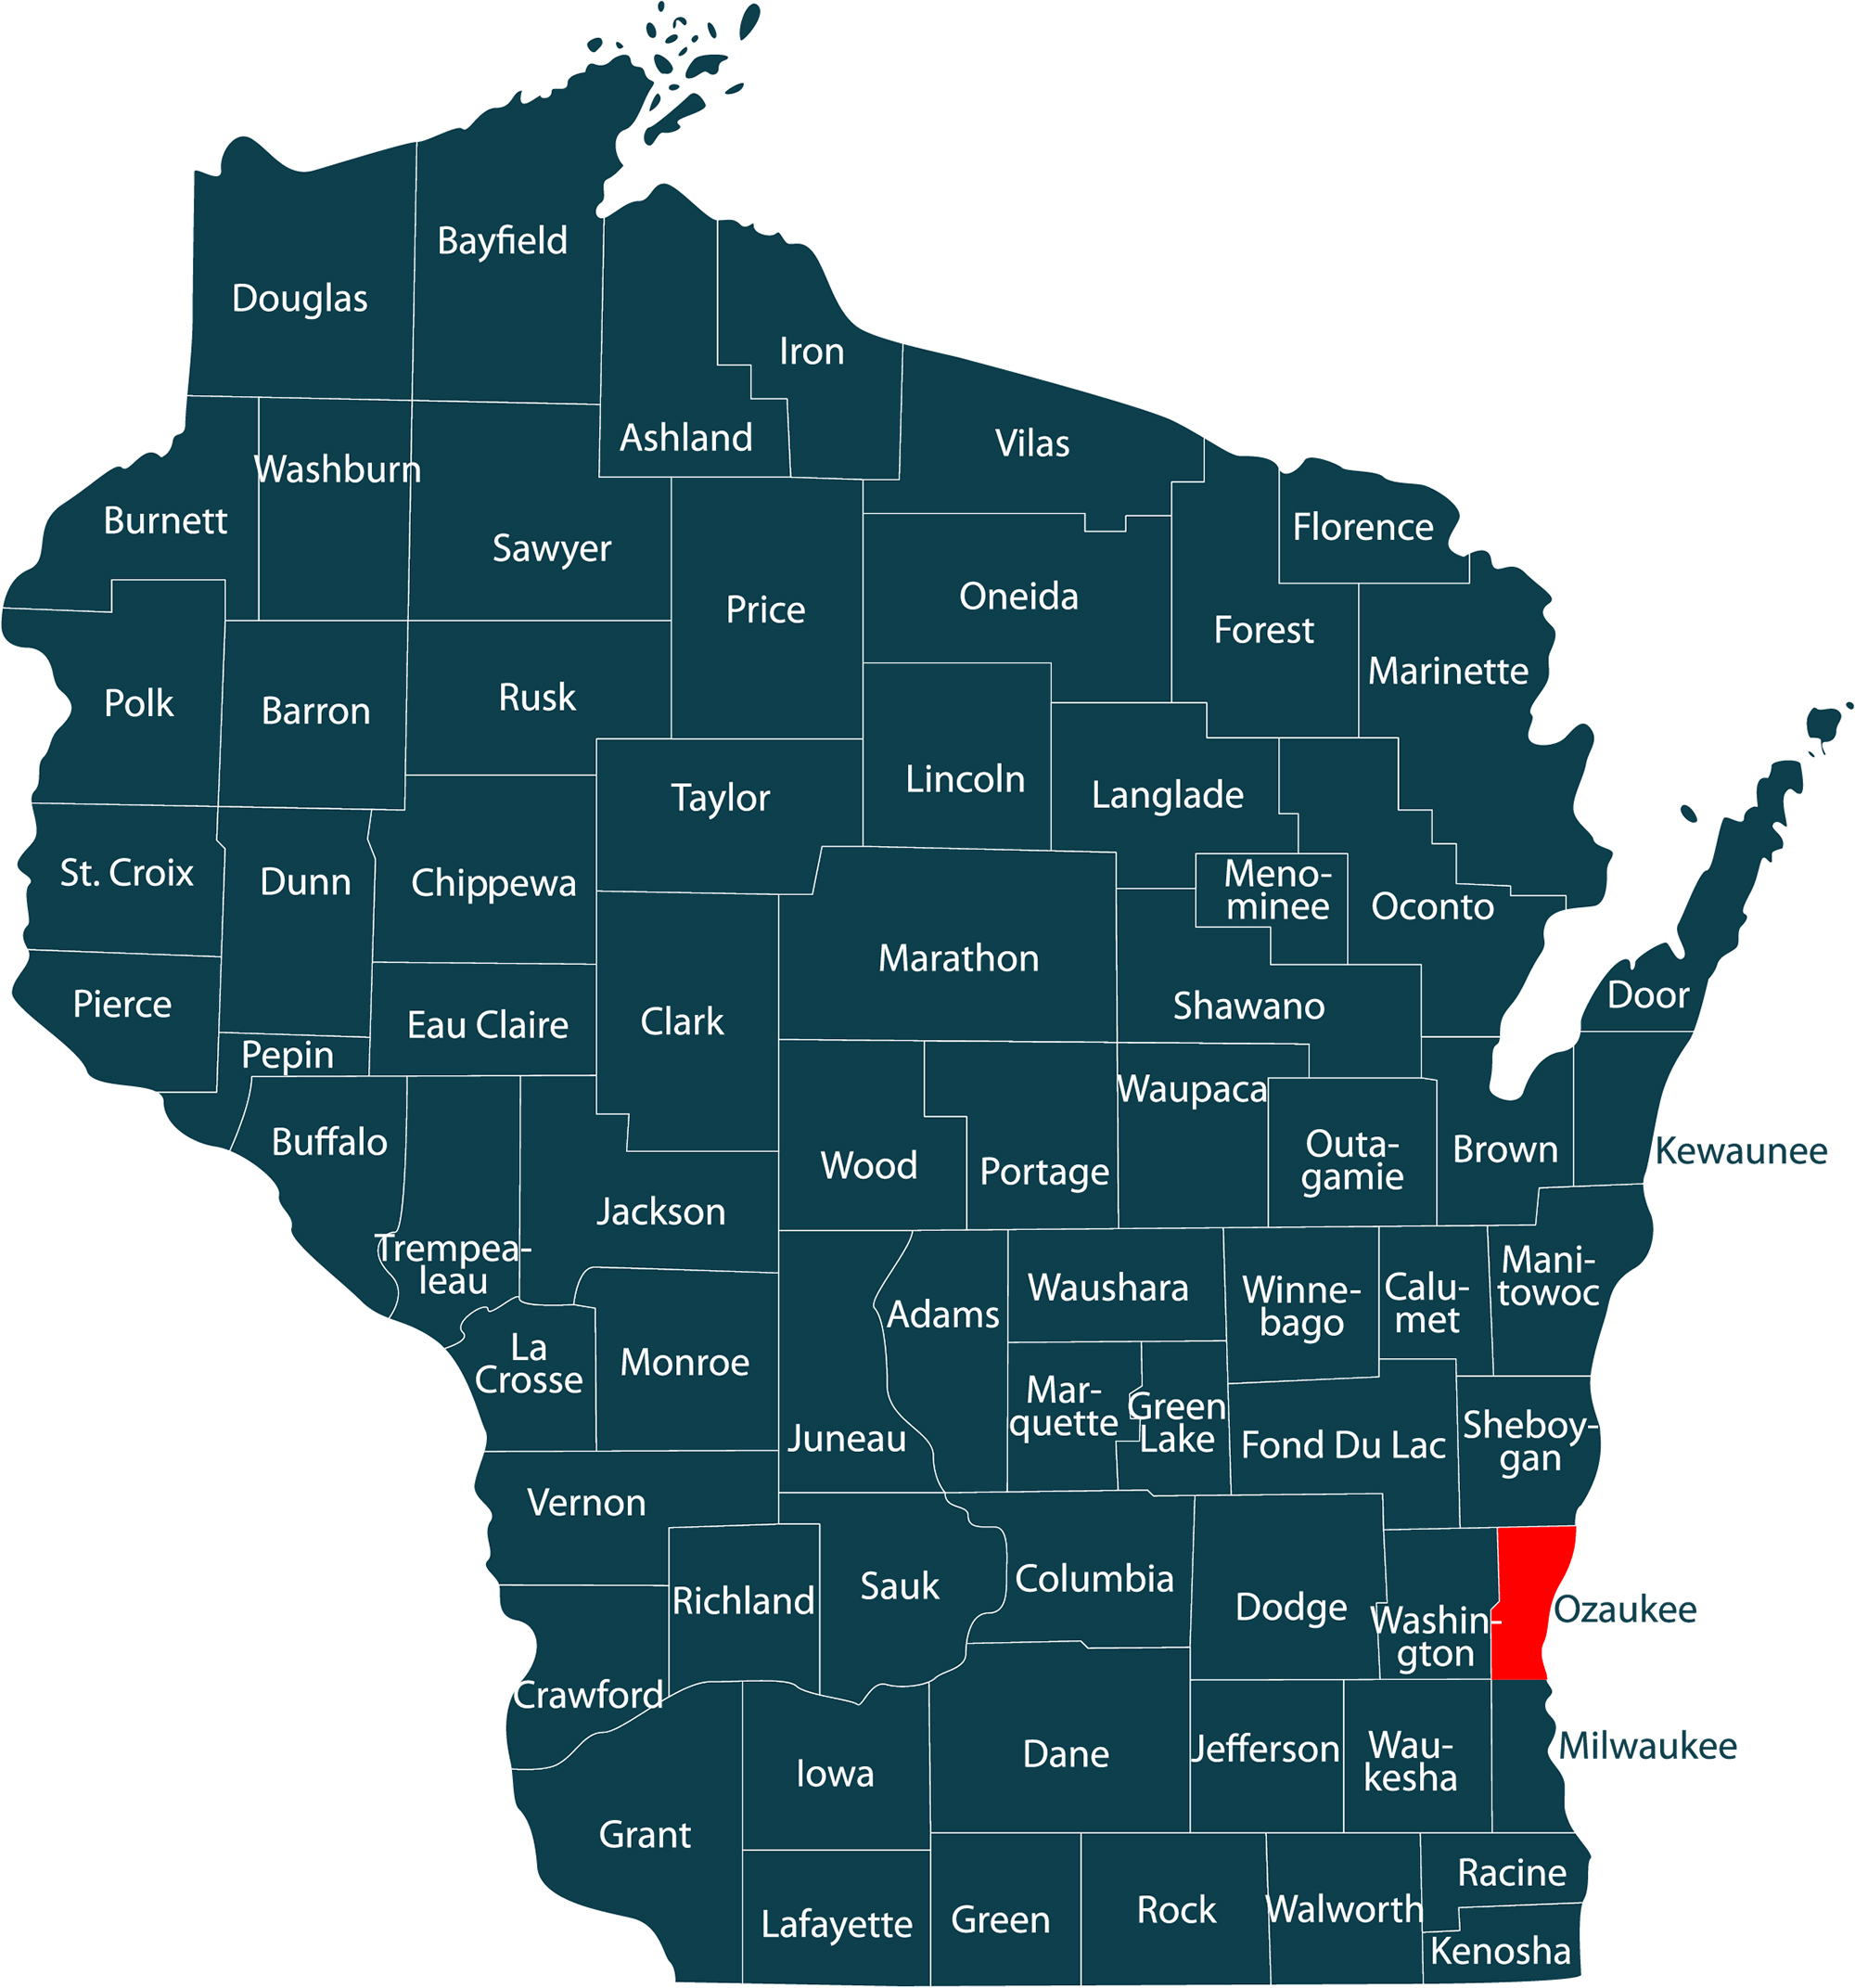 Ozaukee County Wisconsin @ wisconsin.com